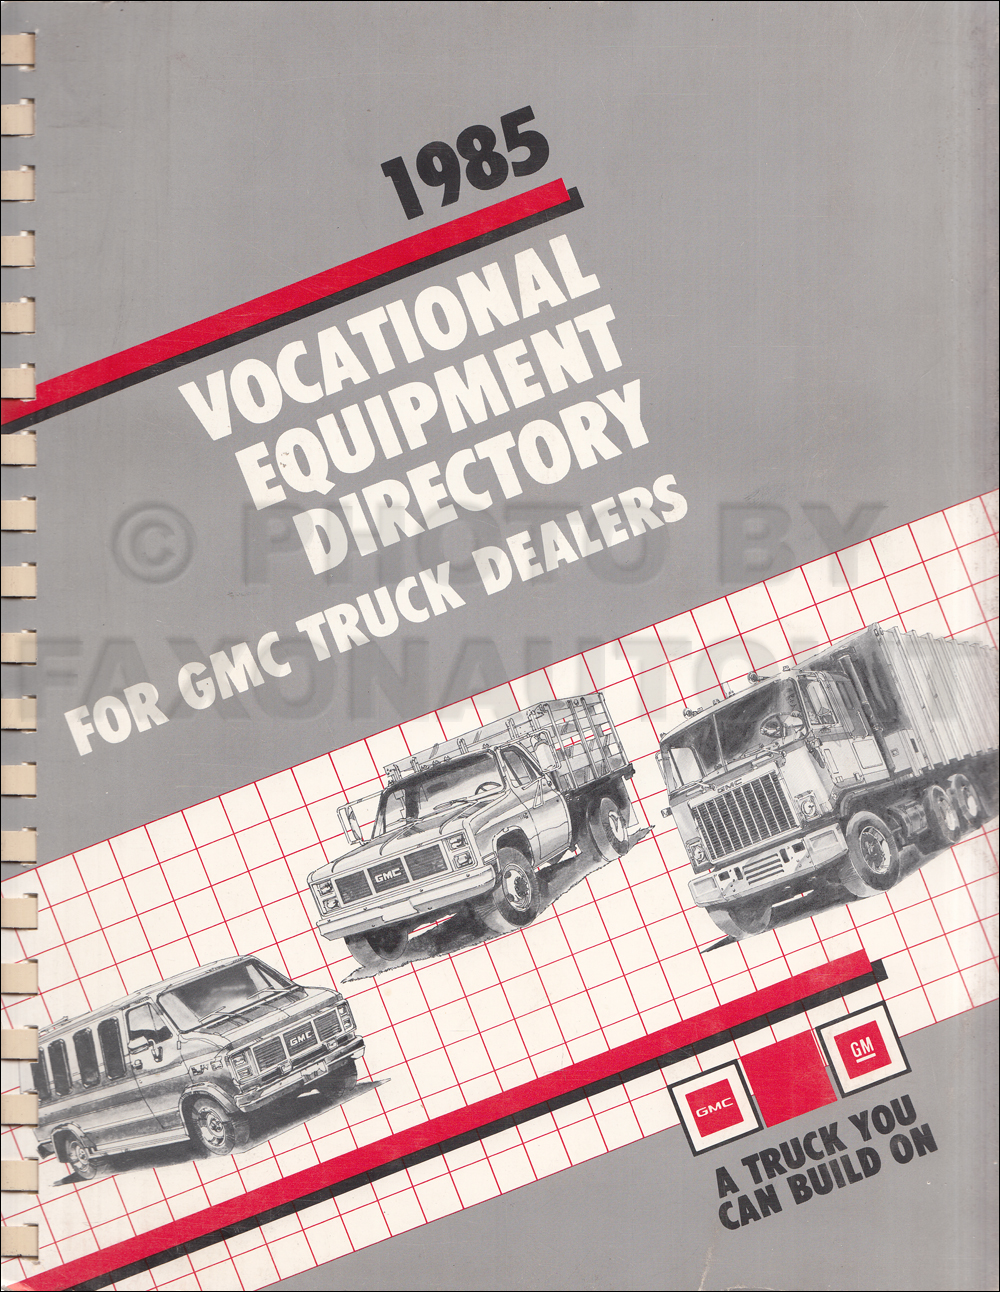 1985 GMC Truck Vocational Equipment Dealer Album Original